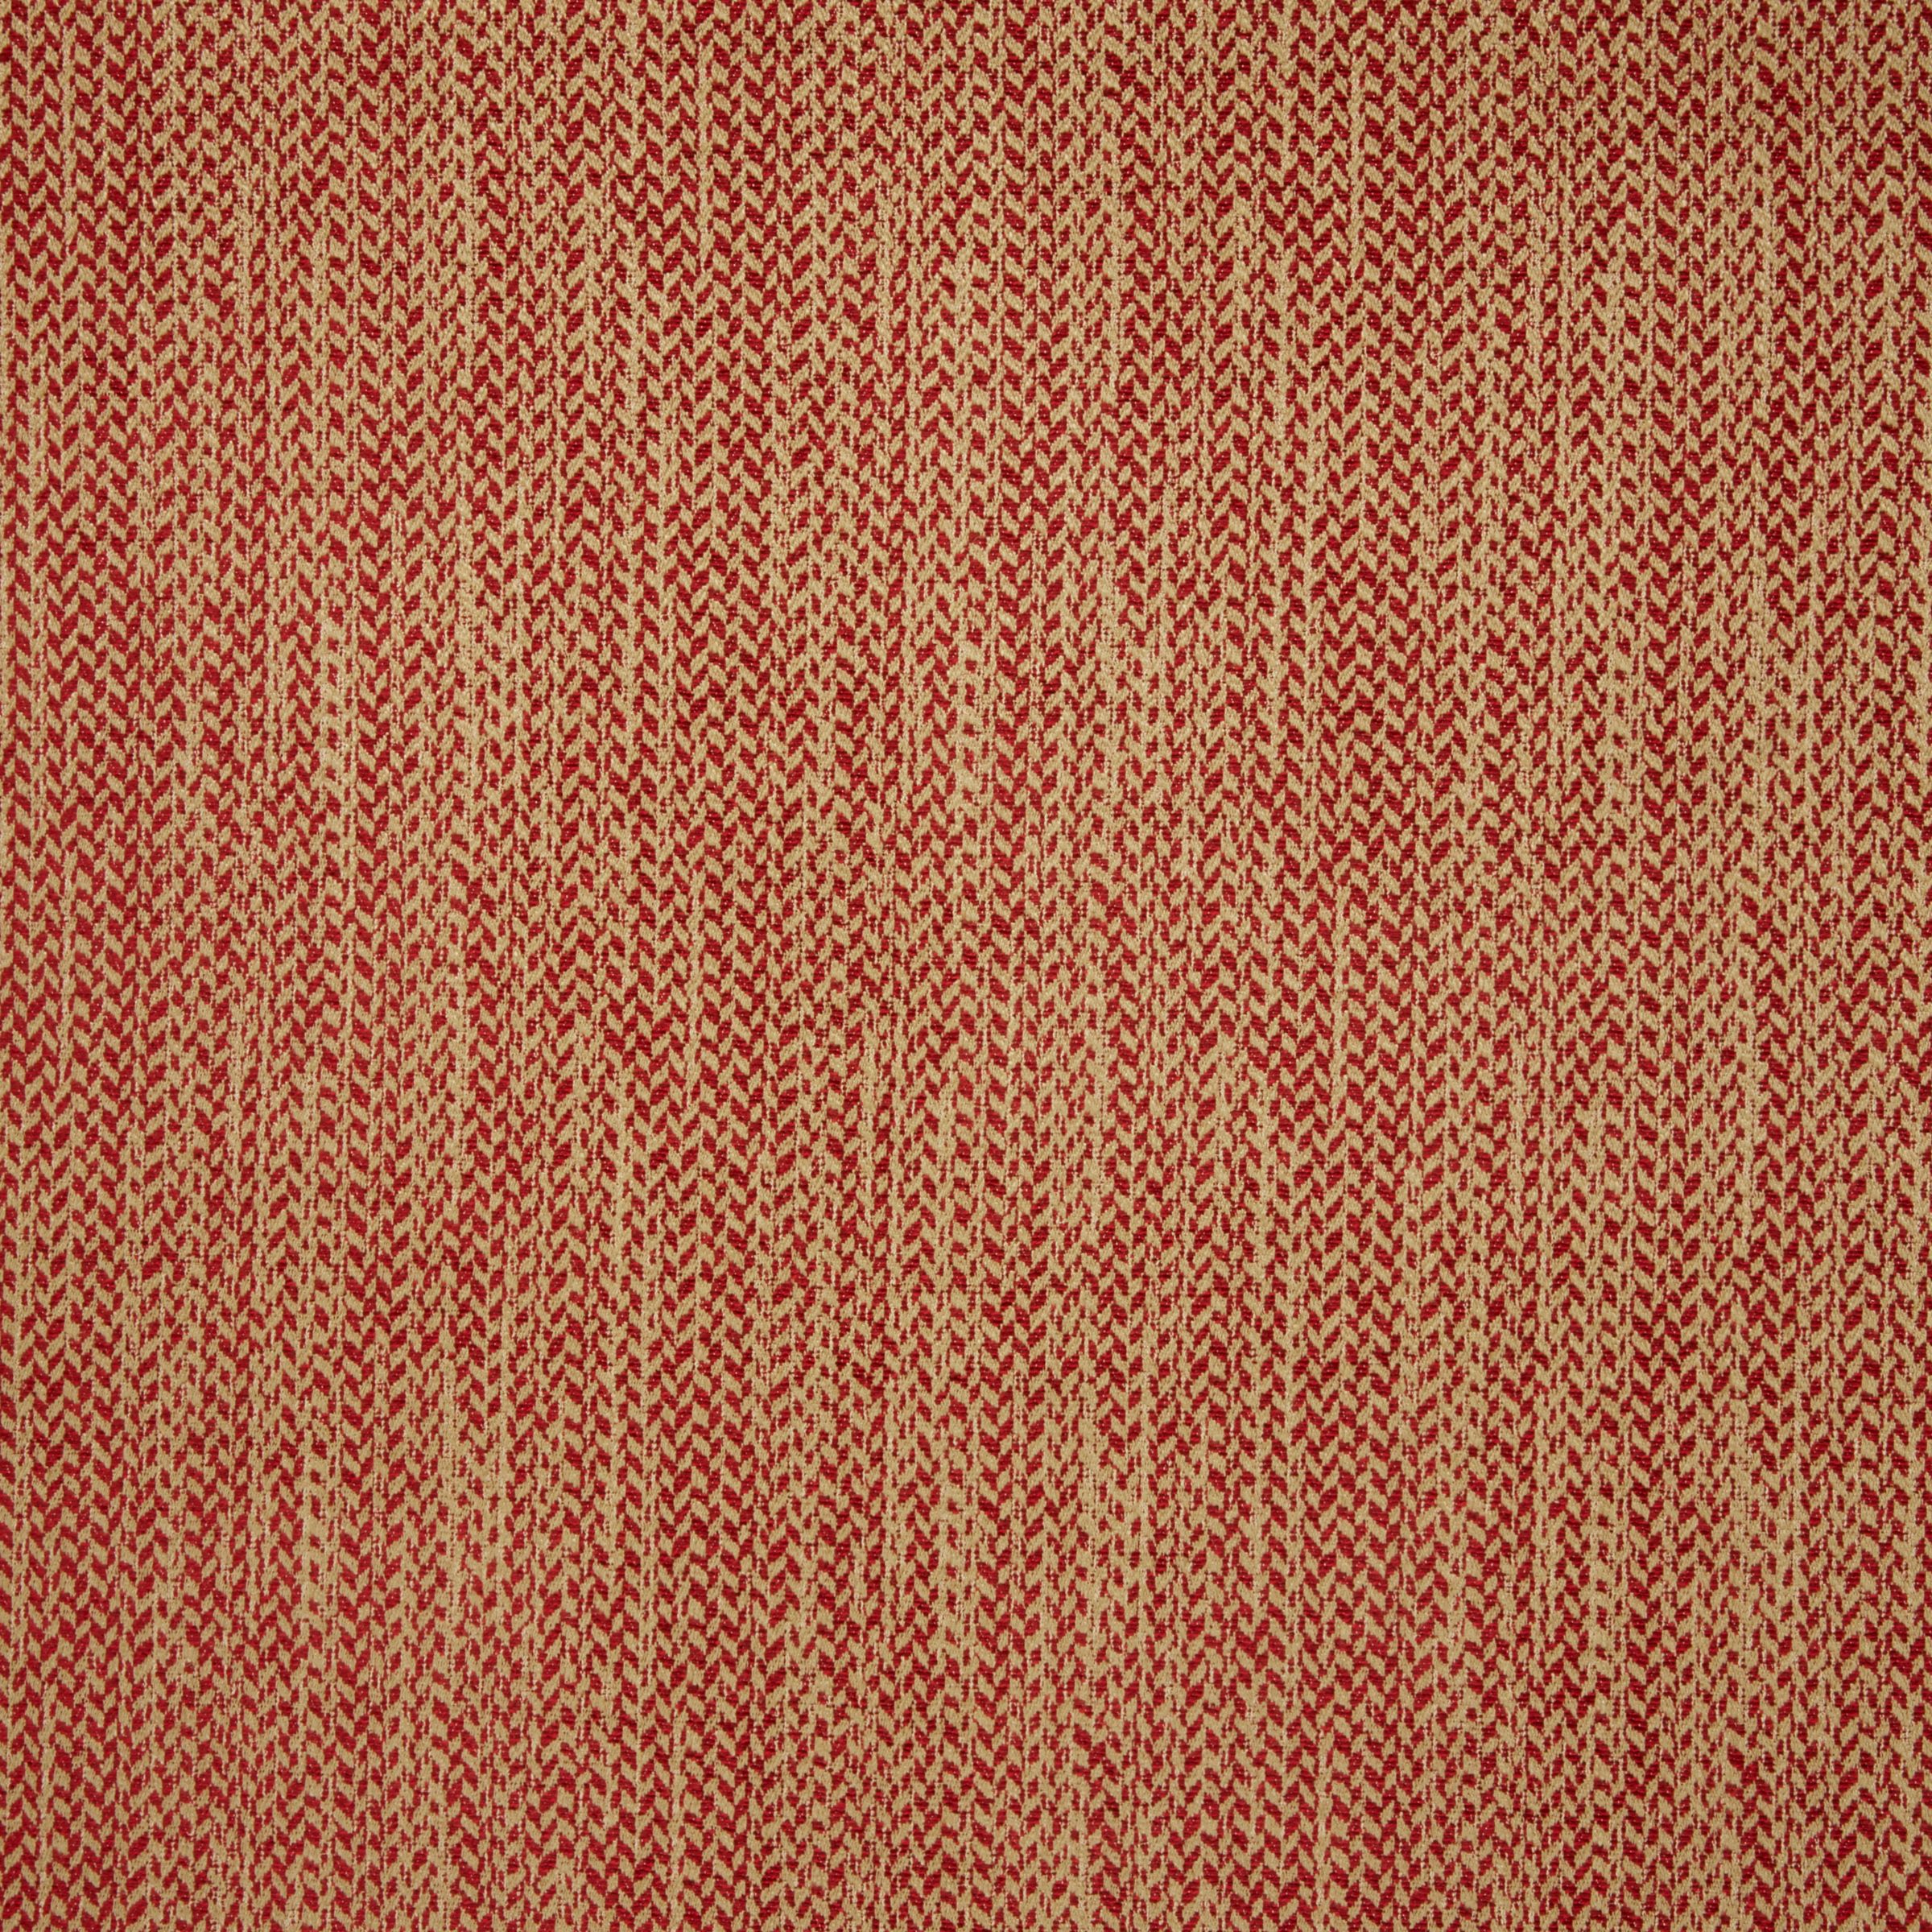 John Lewis & Partners Napier Furnishing Fabric, Red